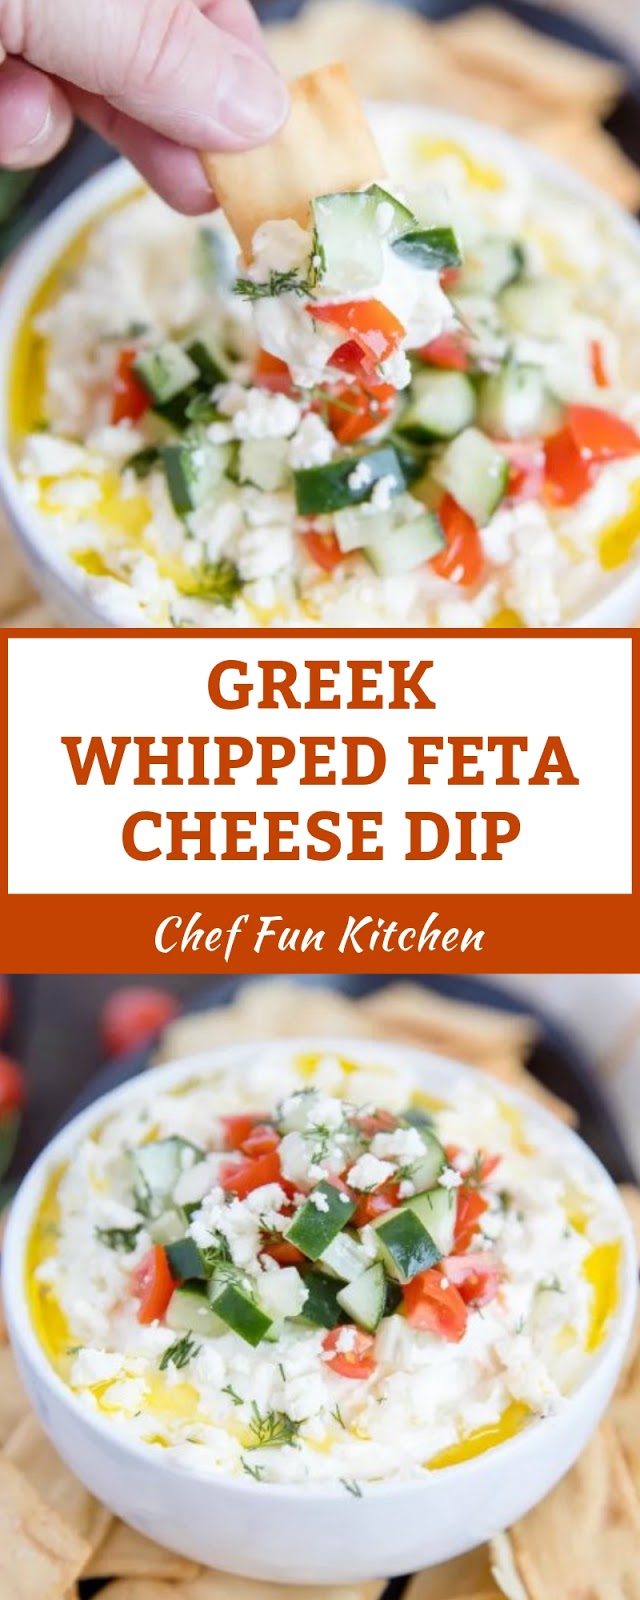 GREEK WHIPPED FETA CHEESE DIP